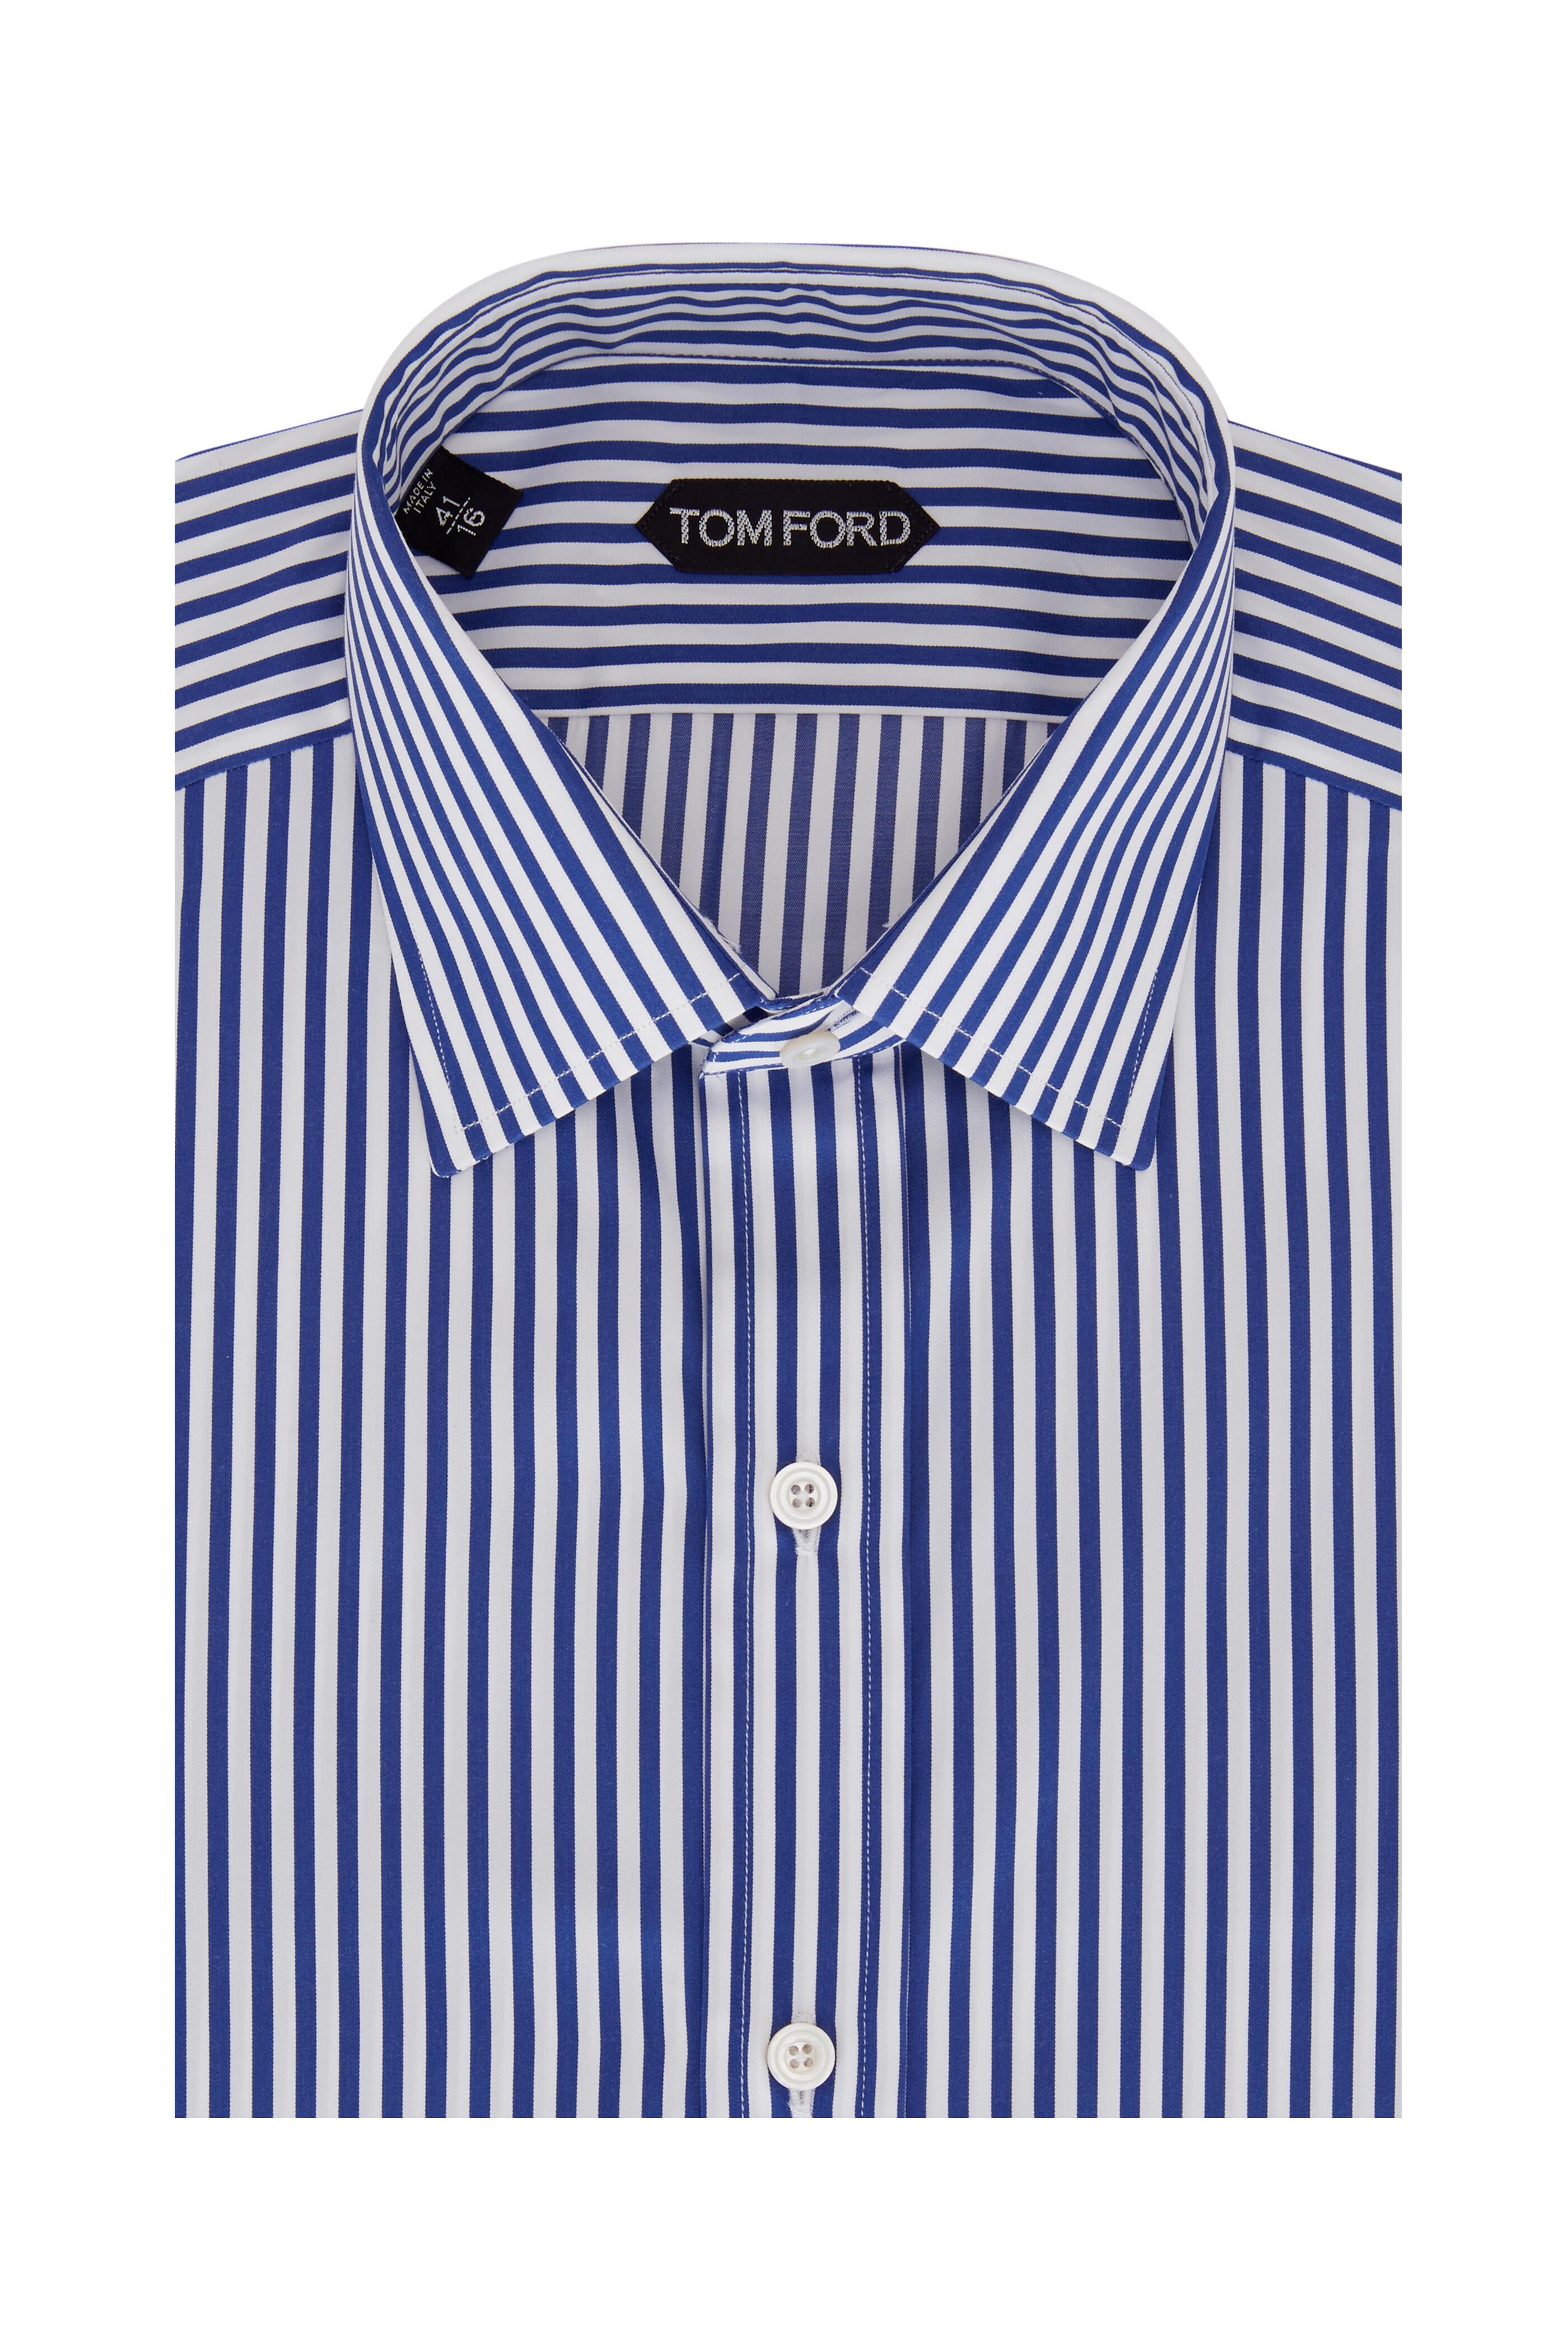 Tom Ford - Navy Blue Striped Dress Shirt | Mitchell Stores